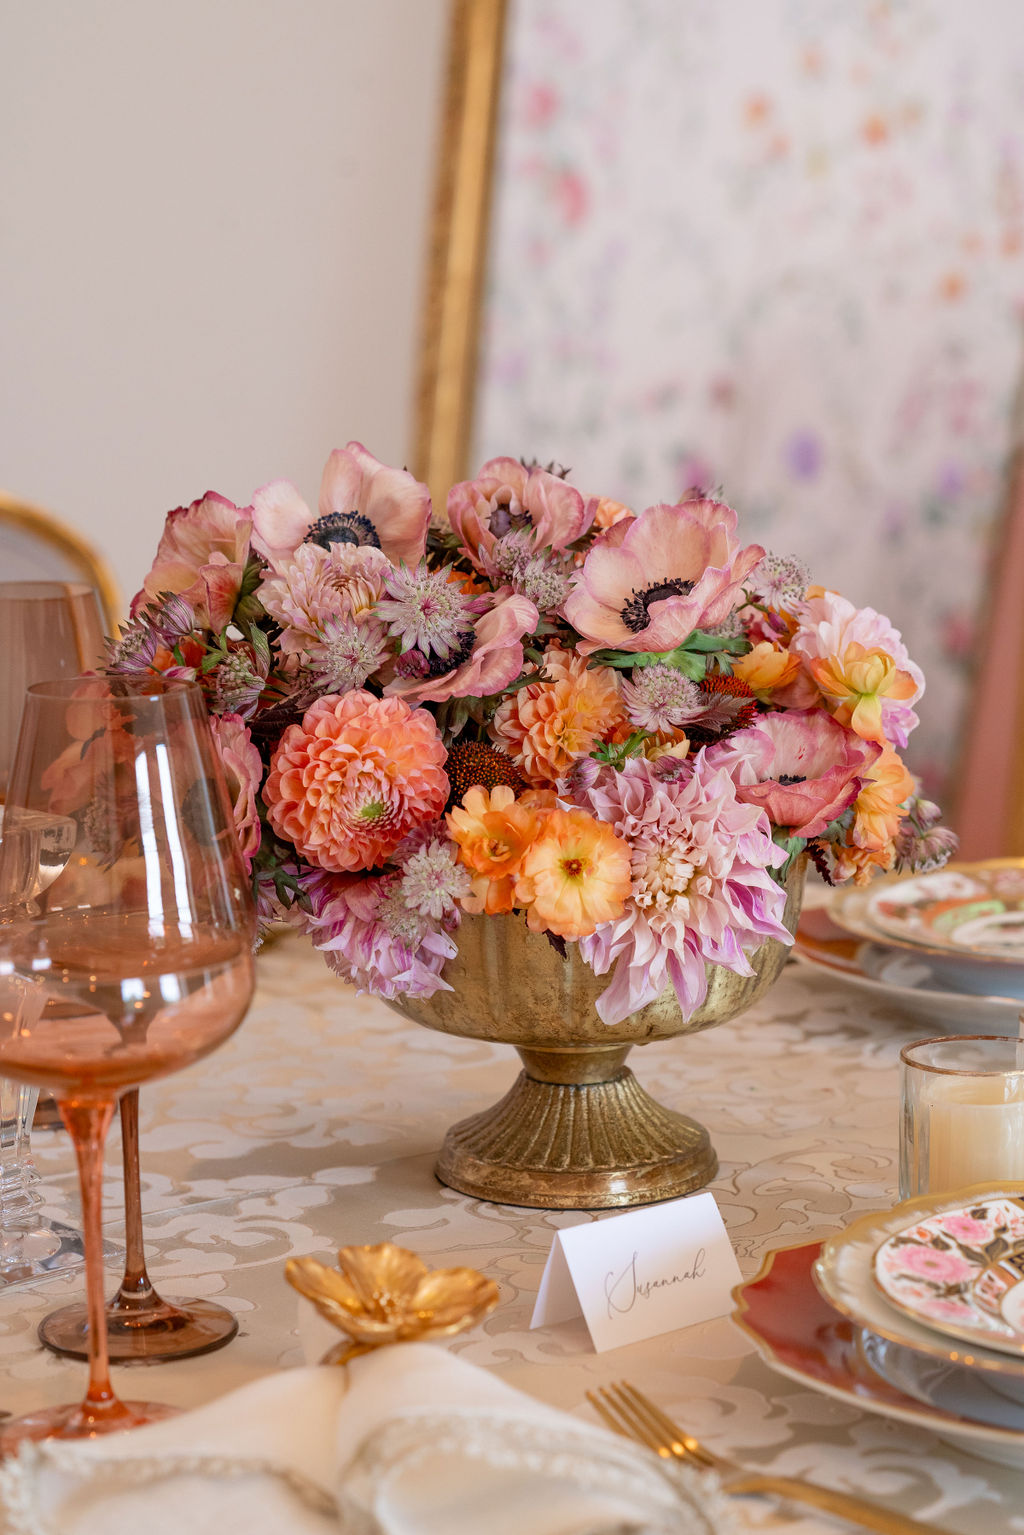 luxe milestone birthday tablescape idea with rose gold